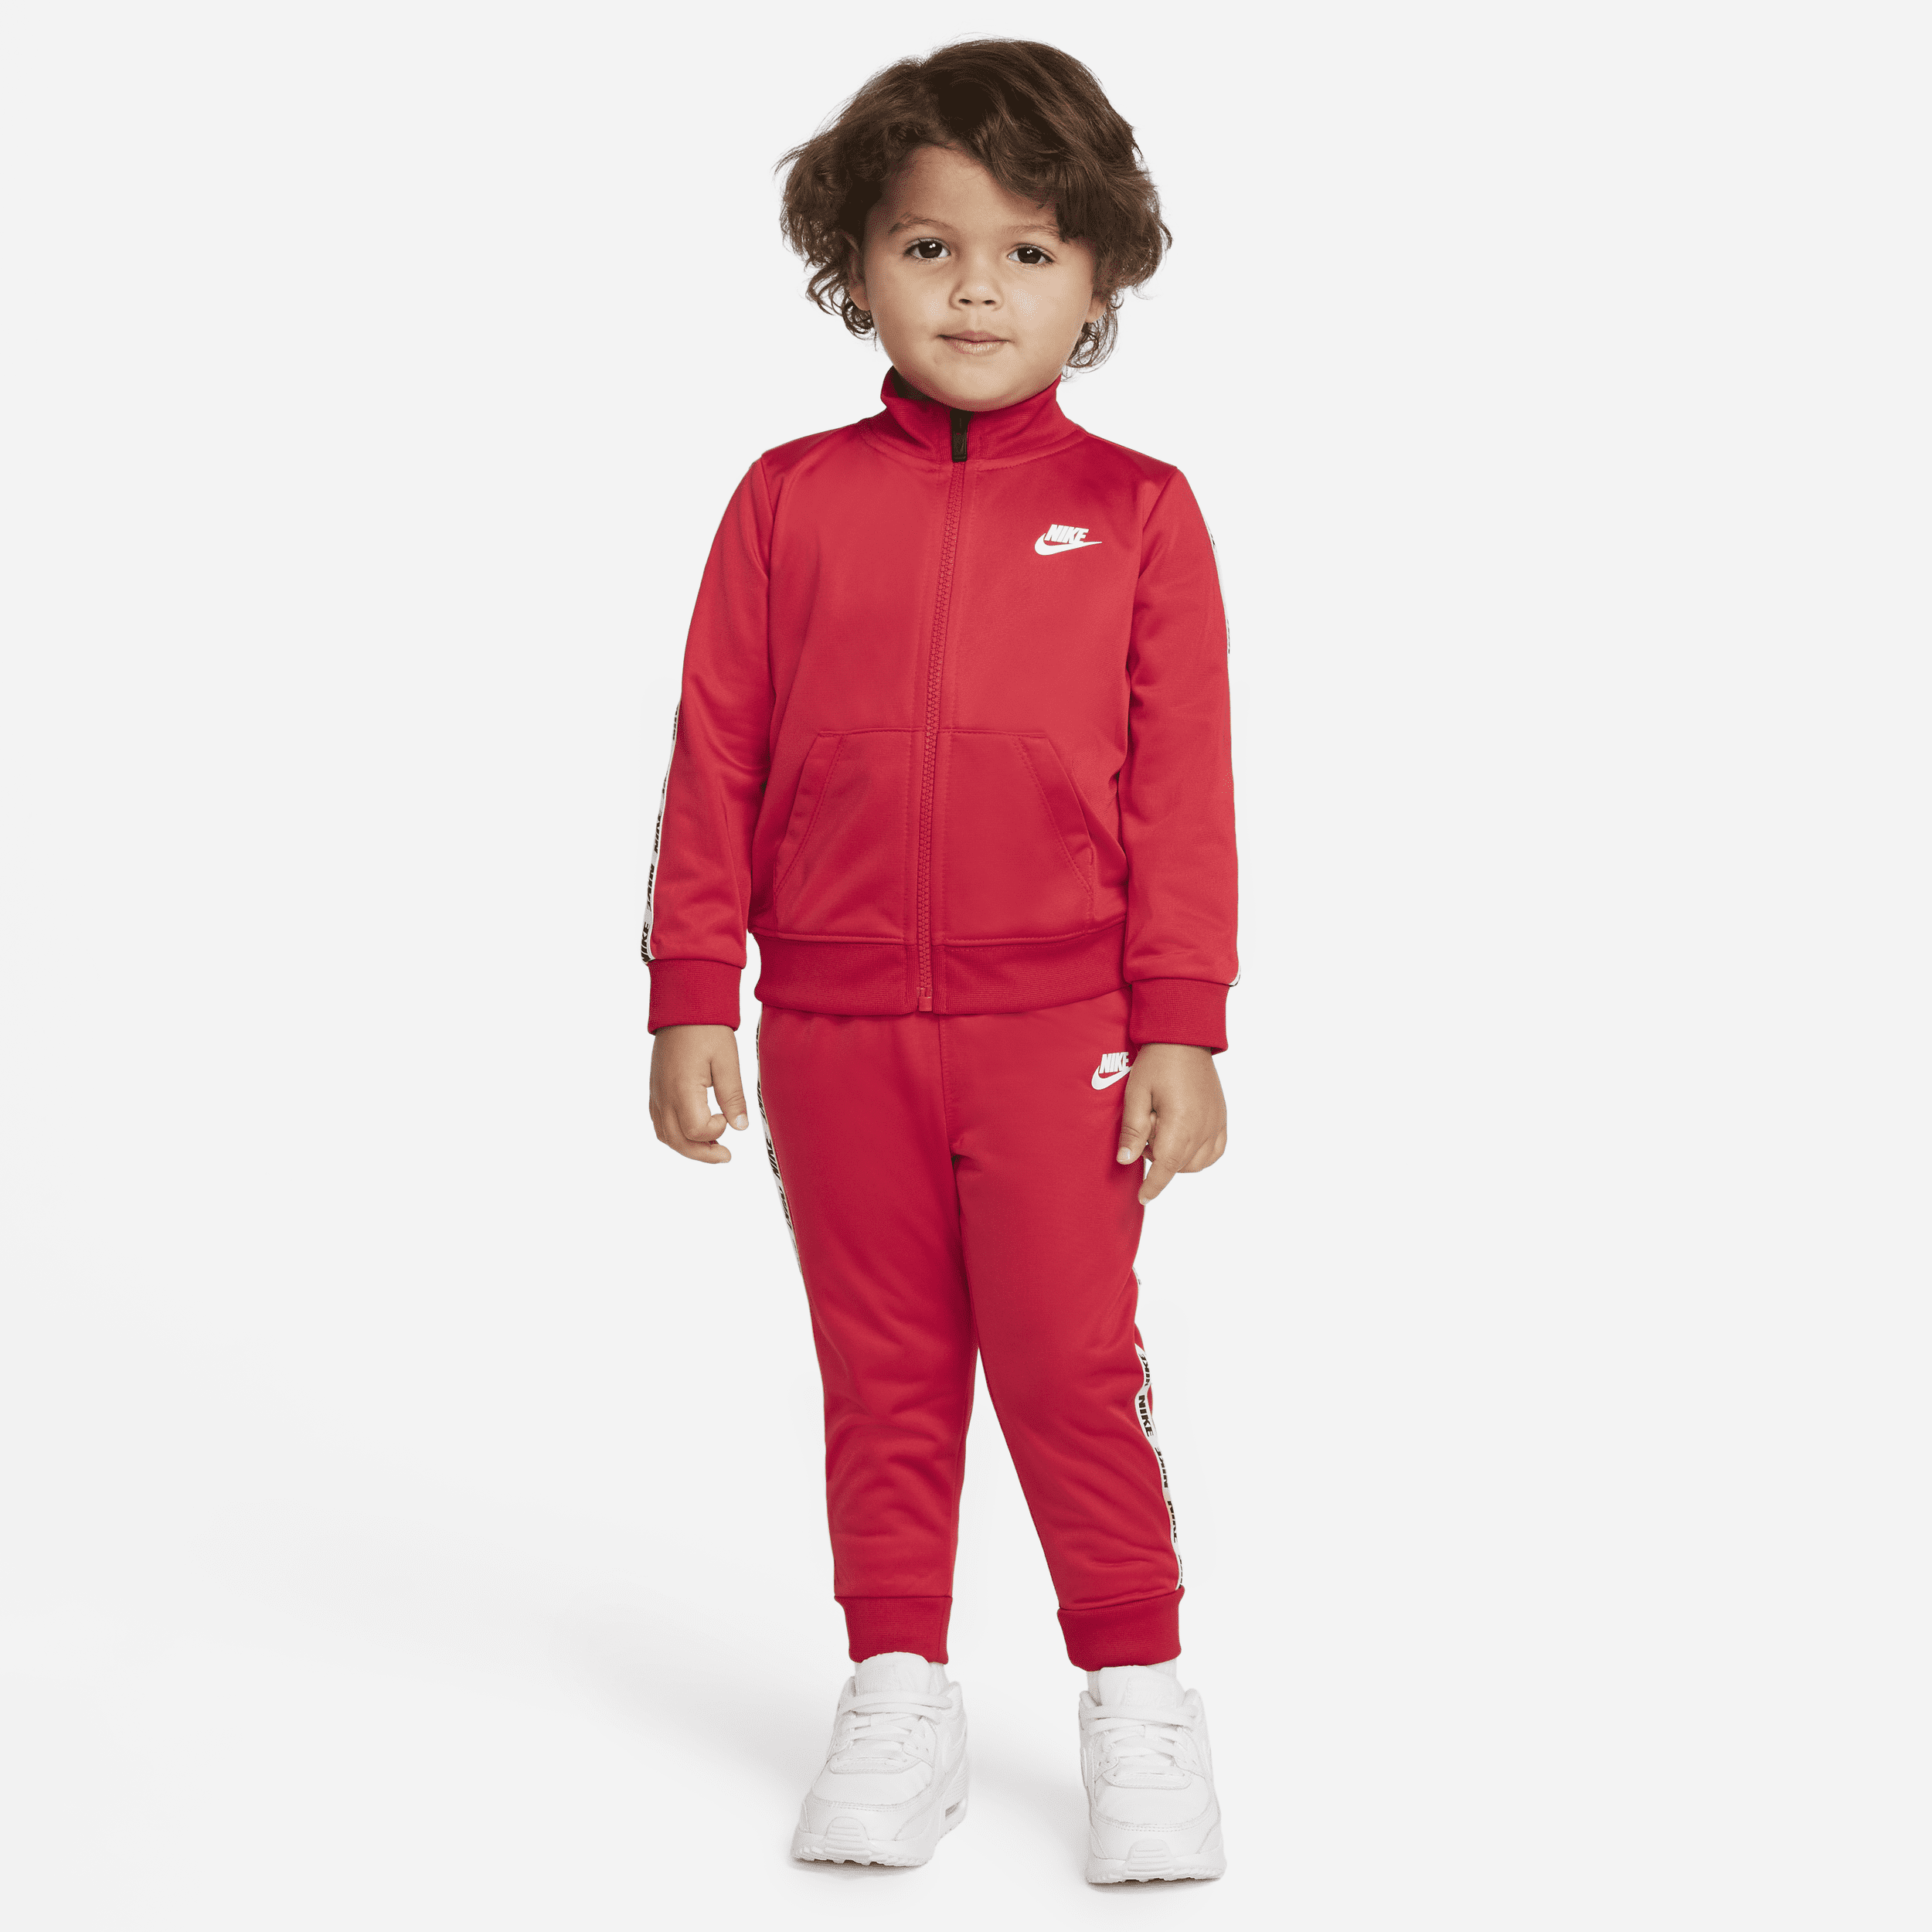 Tuta Nike - Bebè (12-24 mesi) - Rosso